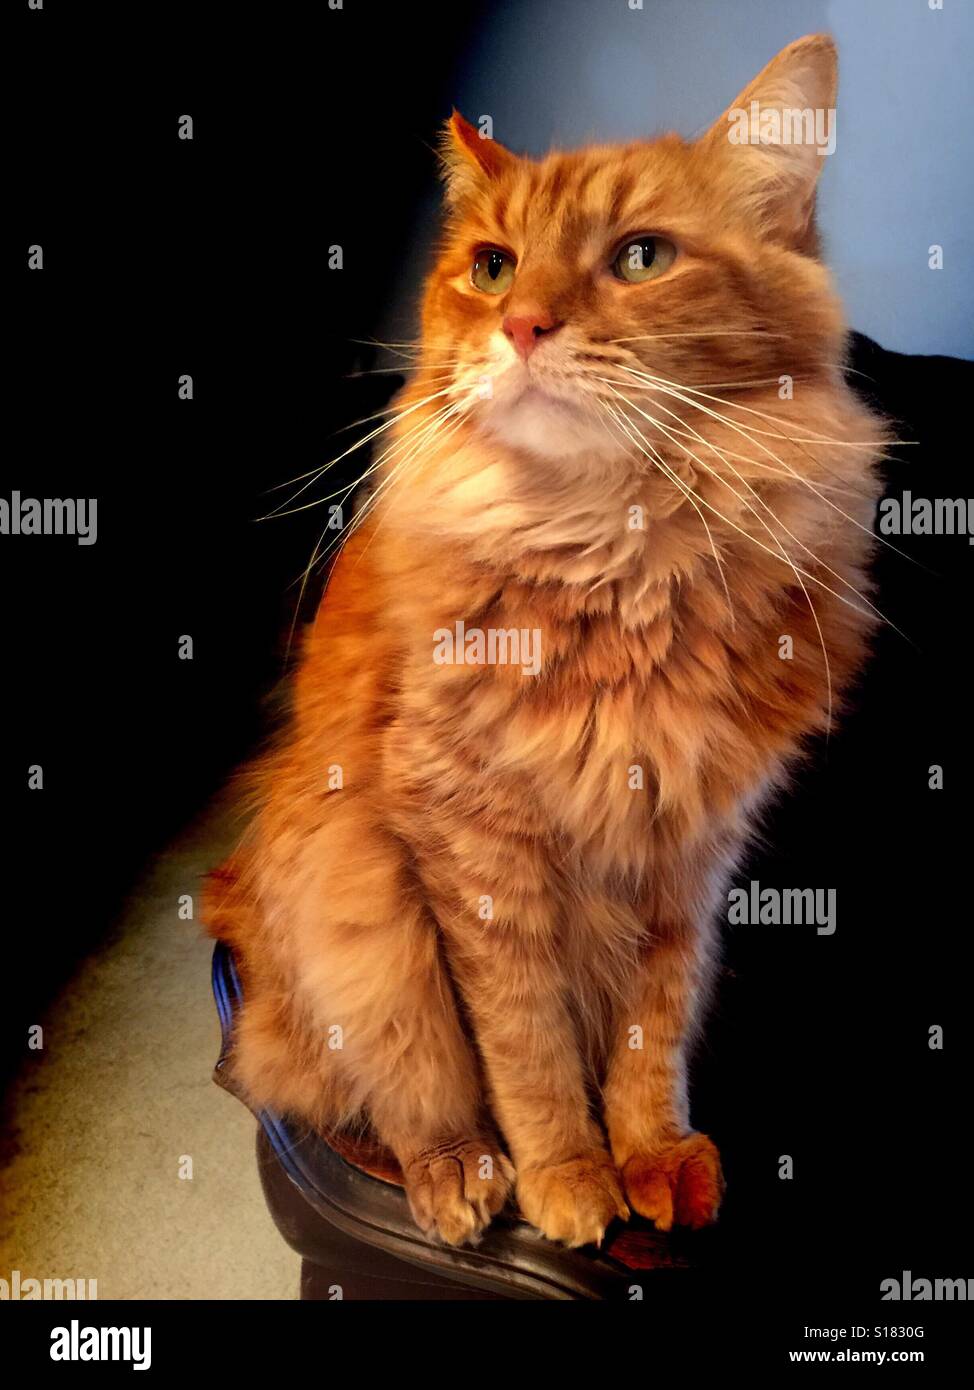 Ginger tom cat sitting upright in an elegant pose Stock Photo